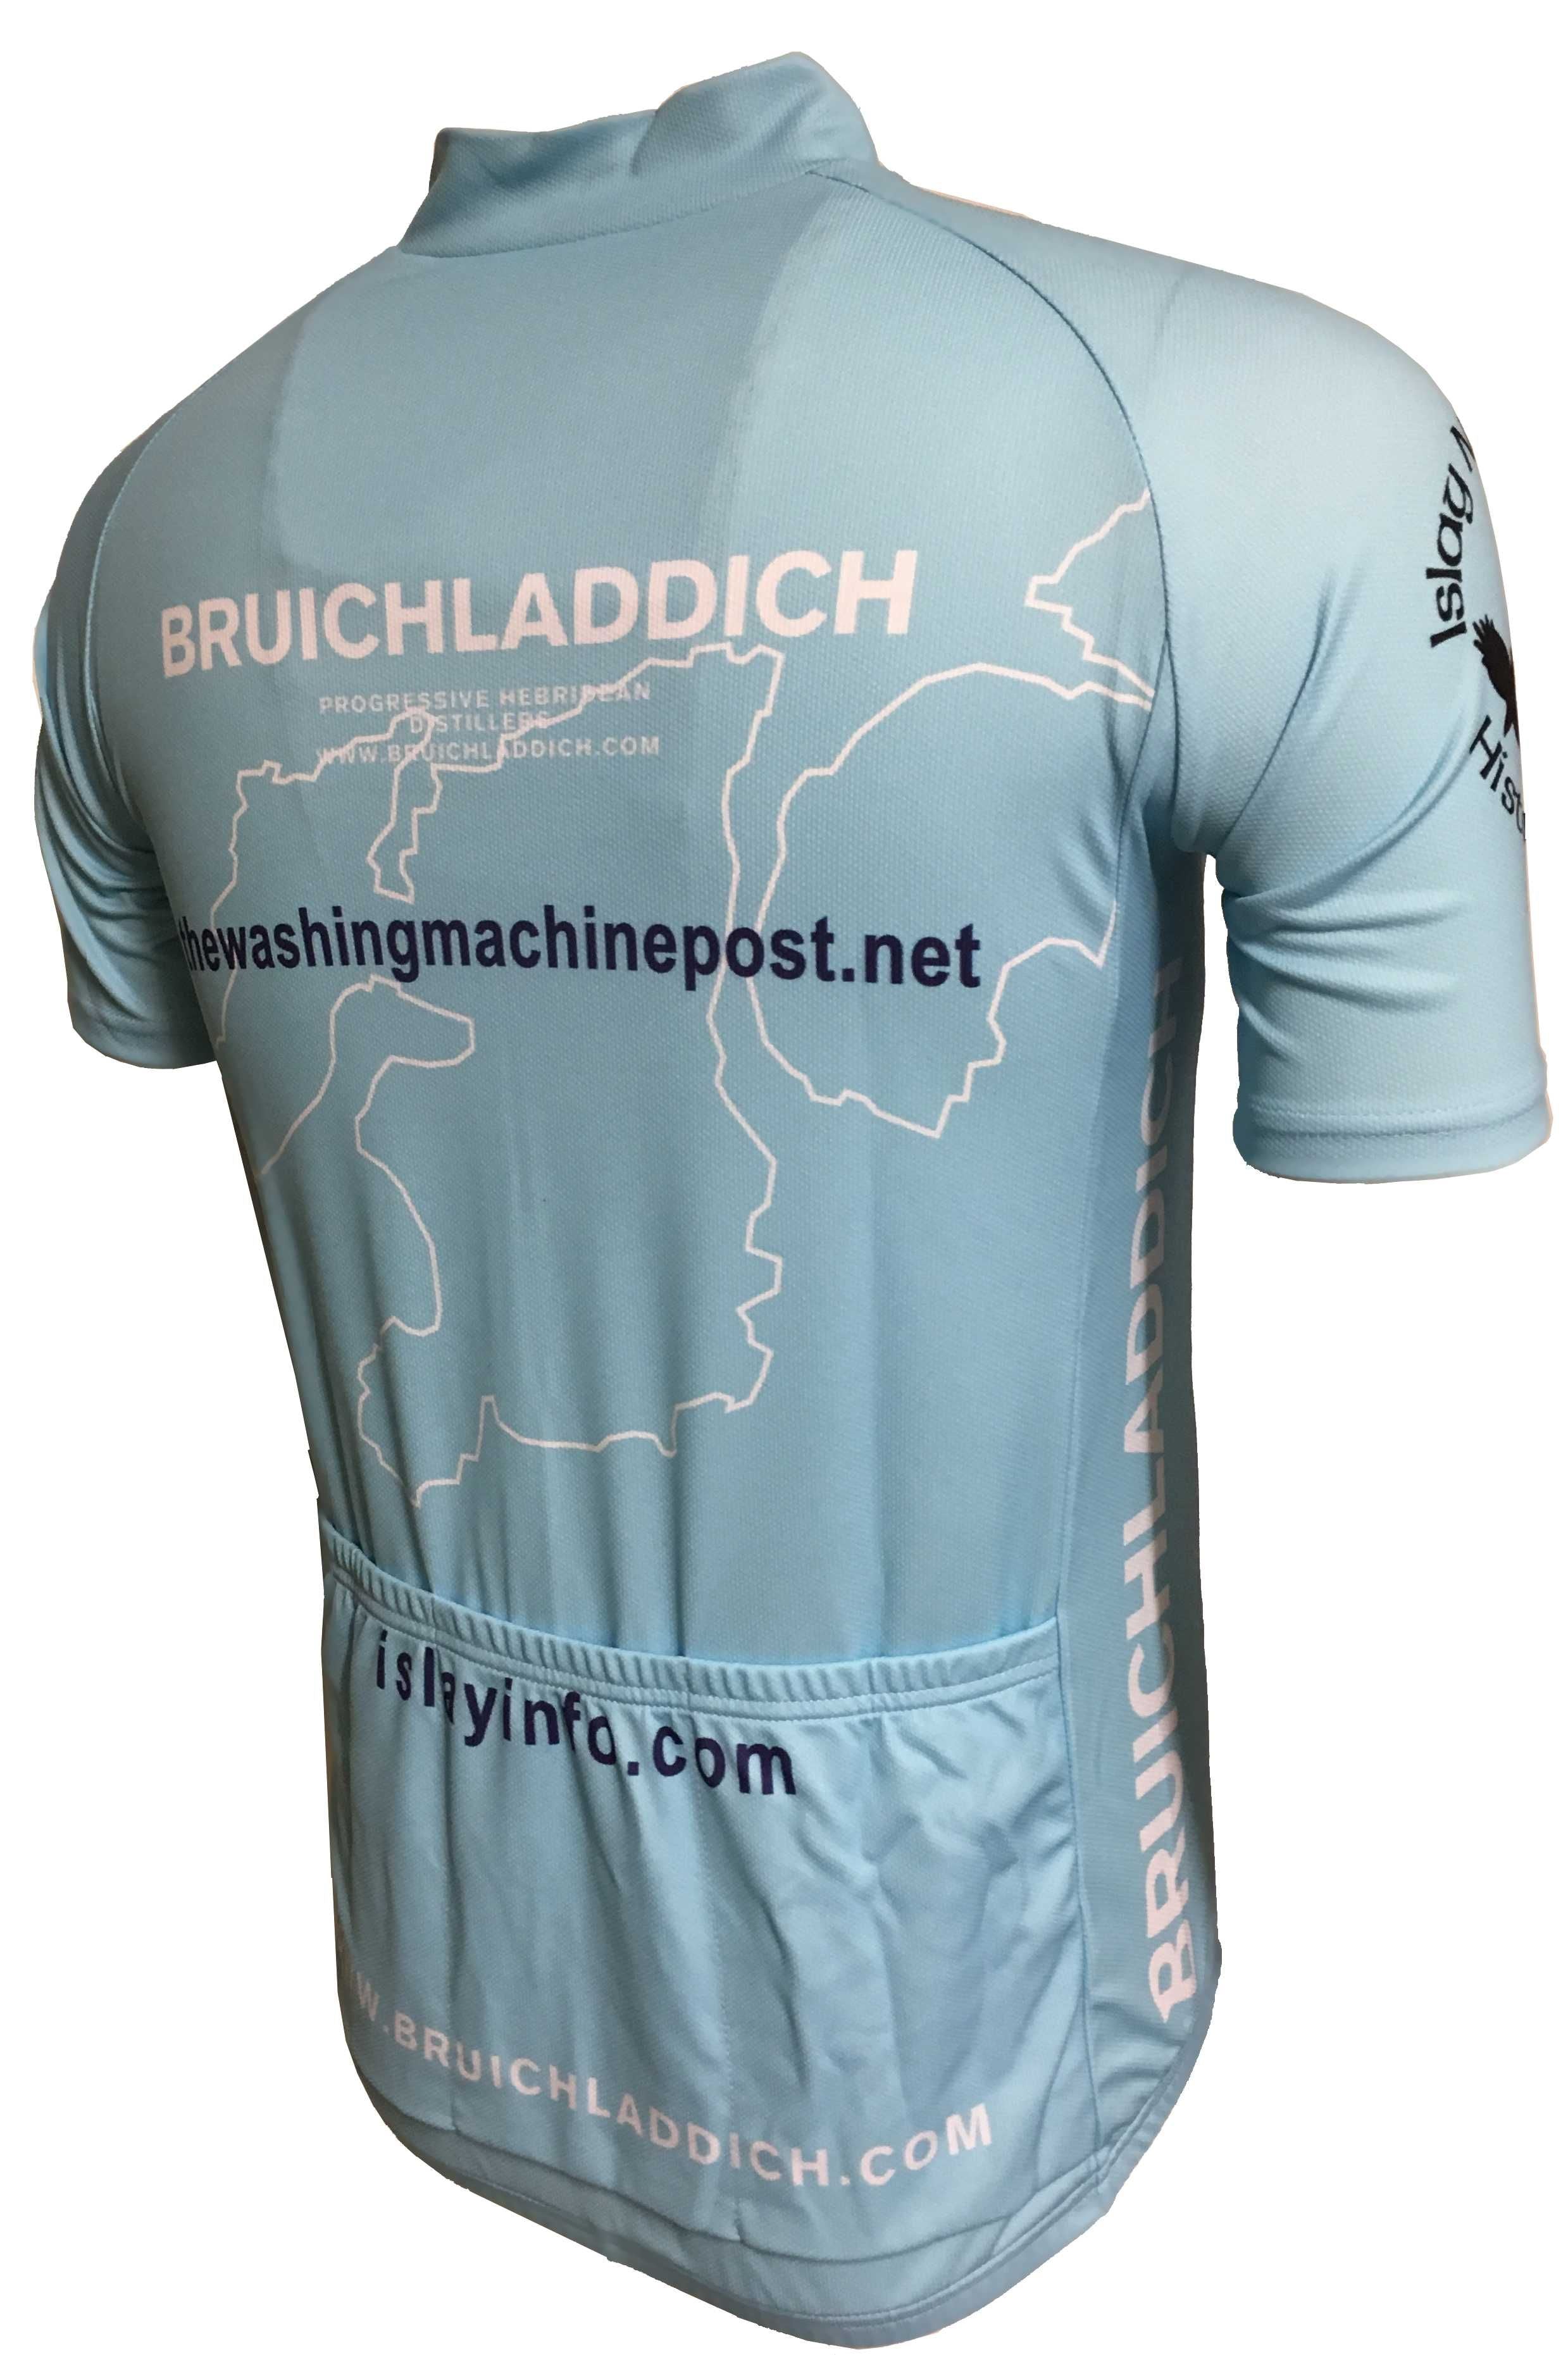 Bruichladdich Original Road Cycle Jersey Back 